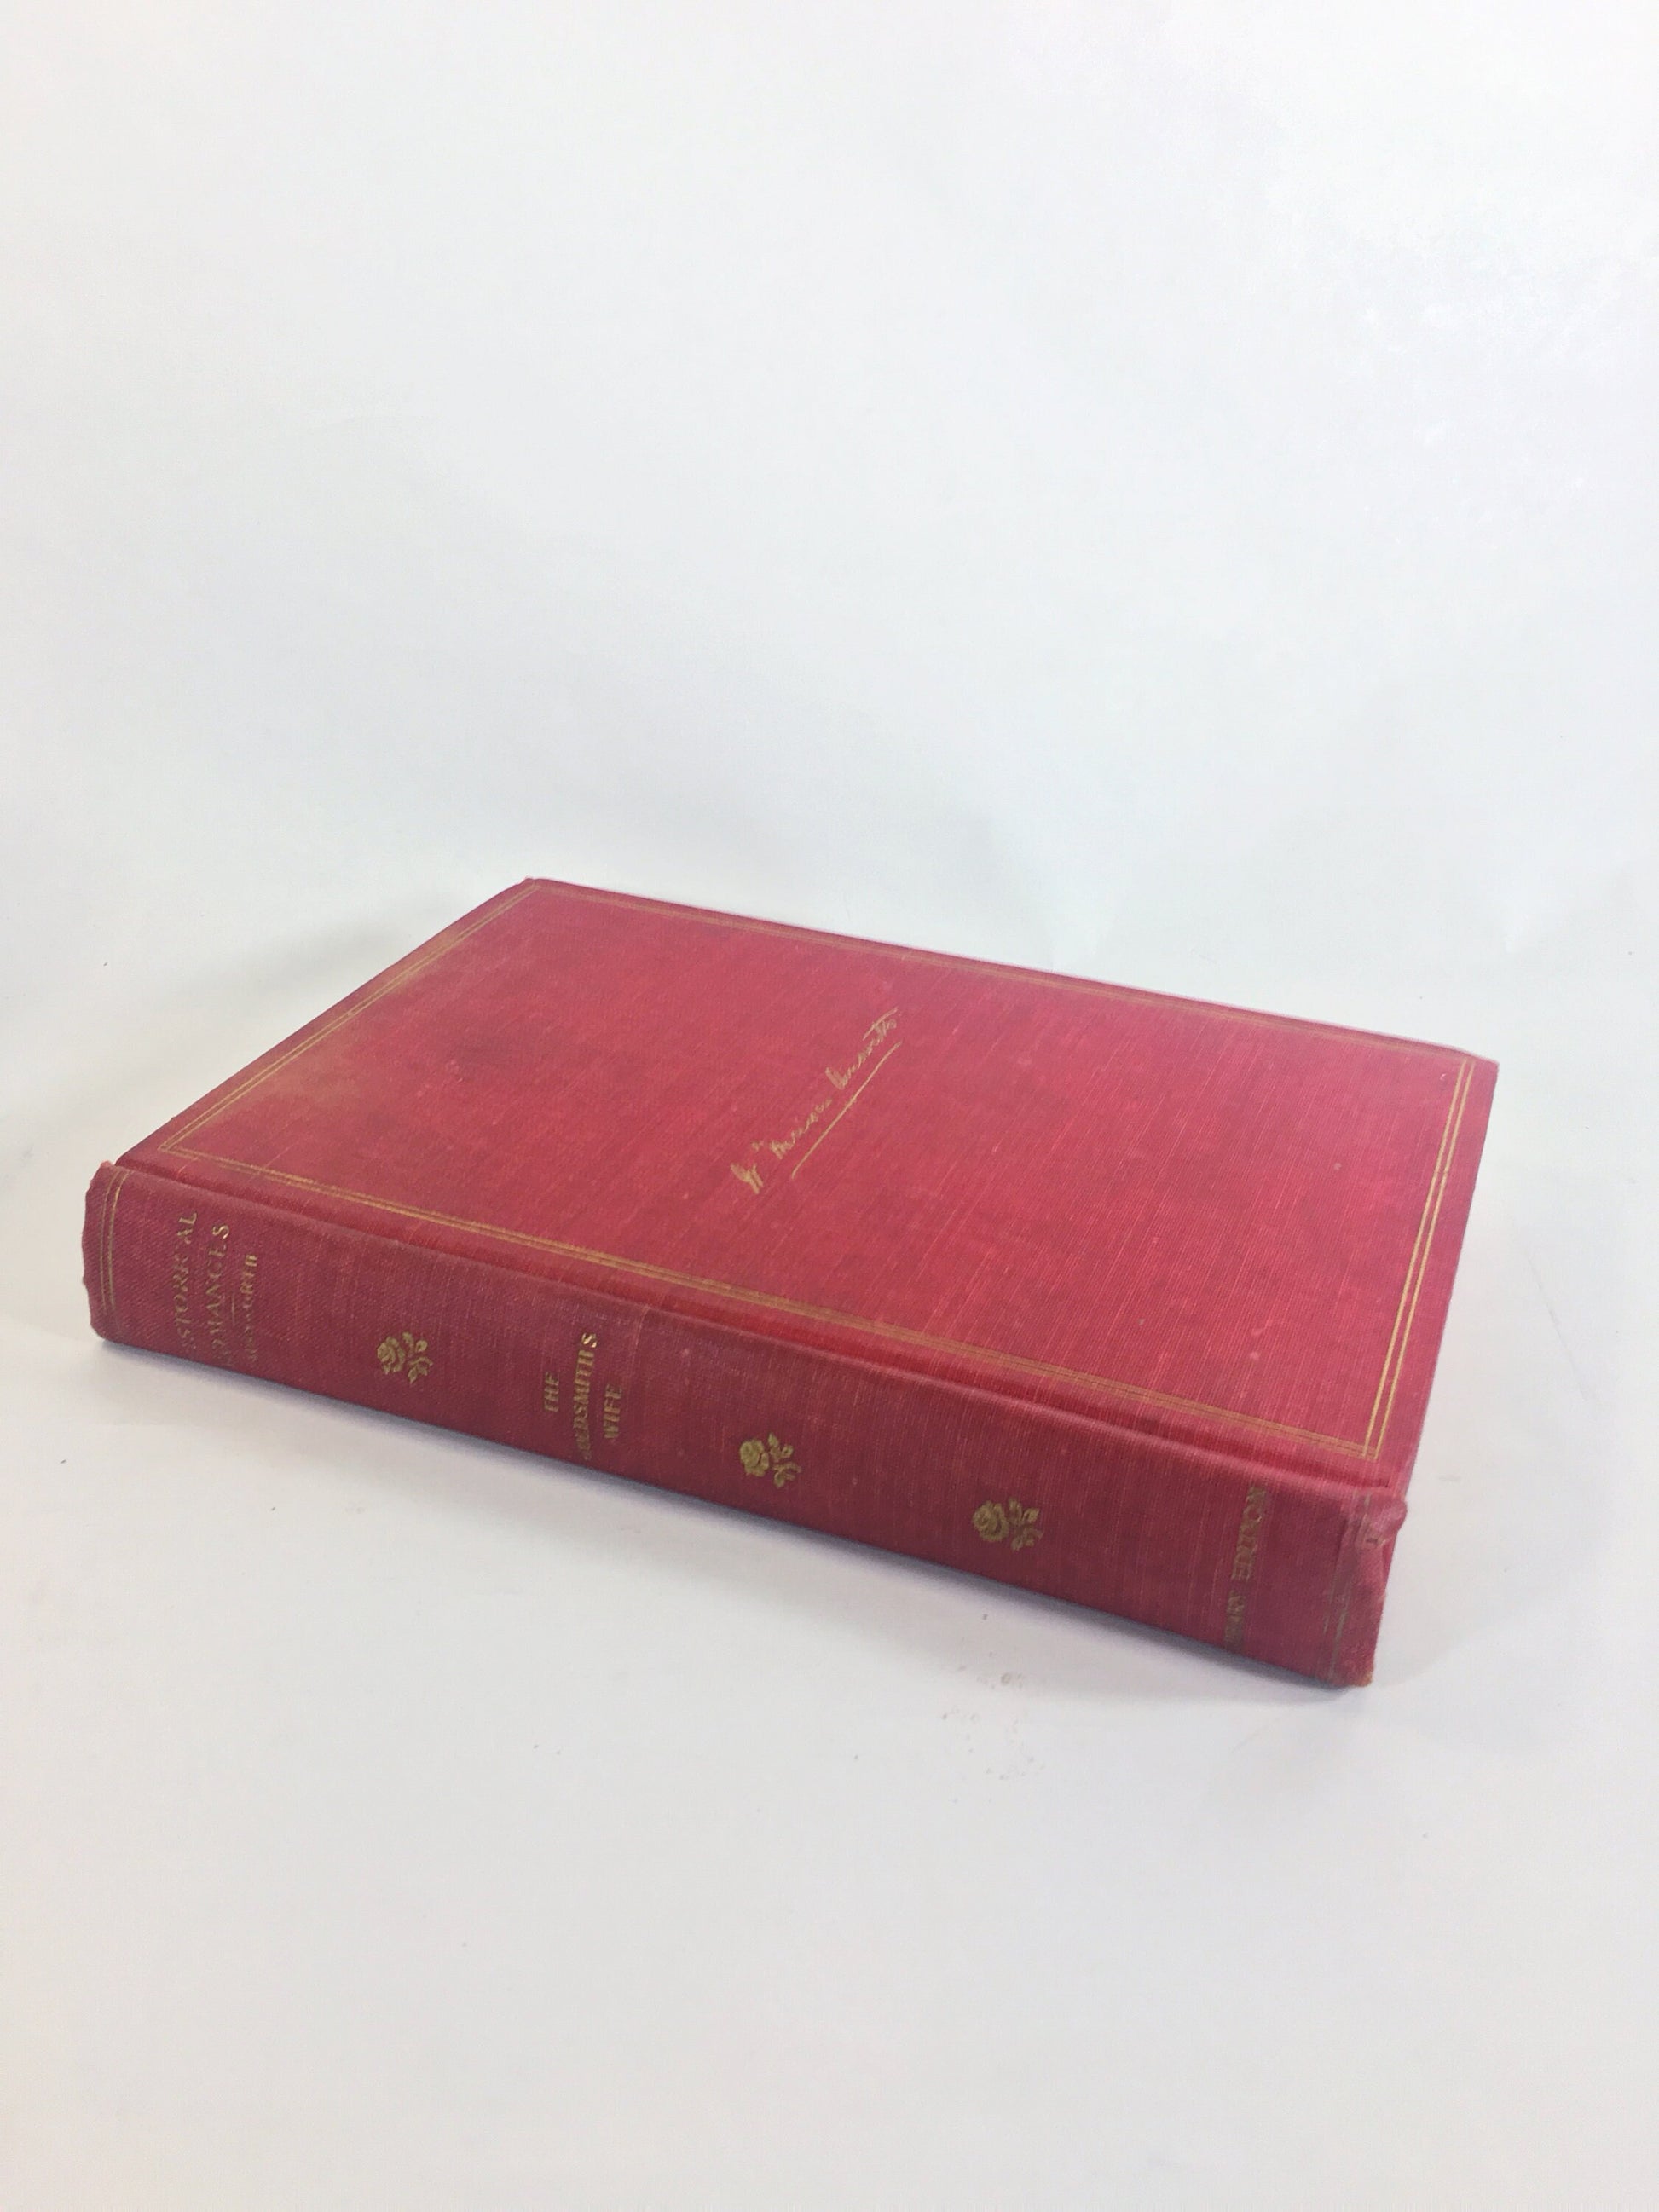 1841 Historical Romances of William Harrison Ainsworth Vintage book Jane Shore, King Edward IV mistress GORGEOUS antique red cloth